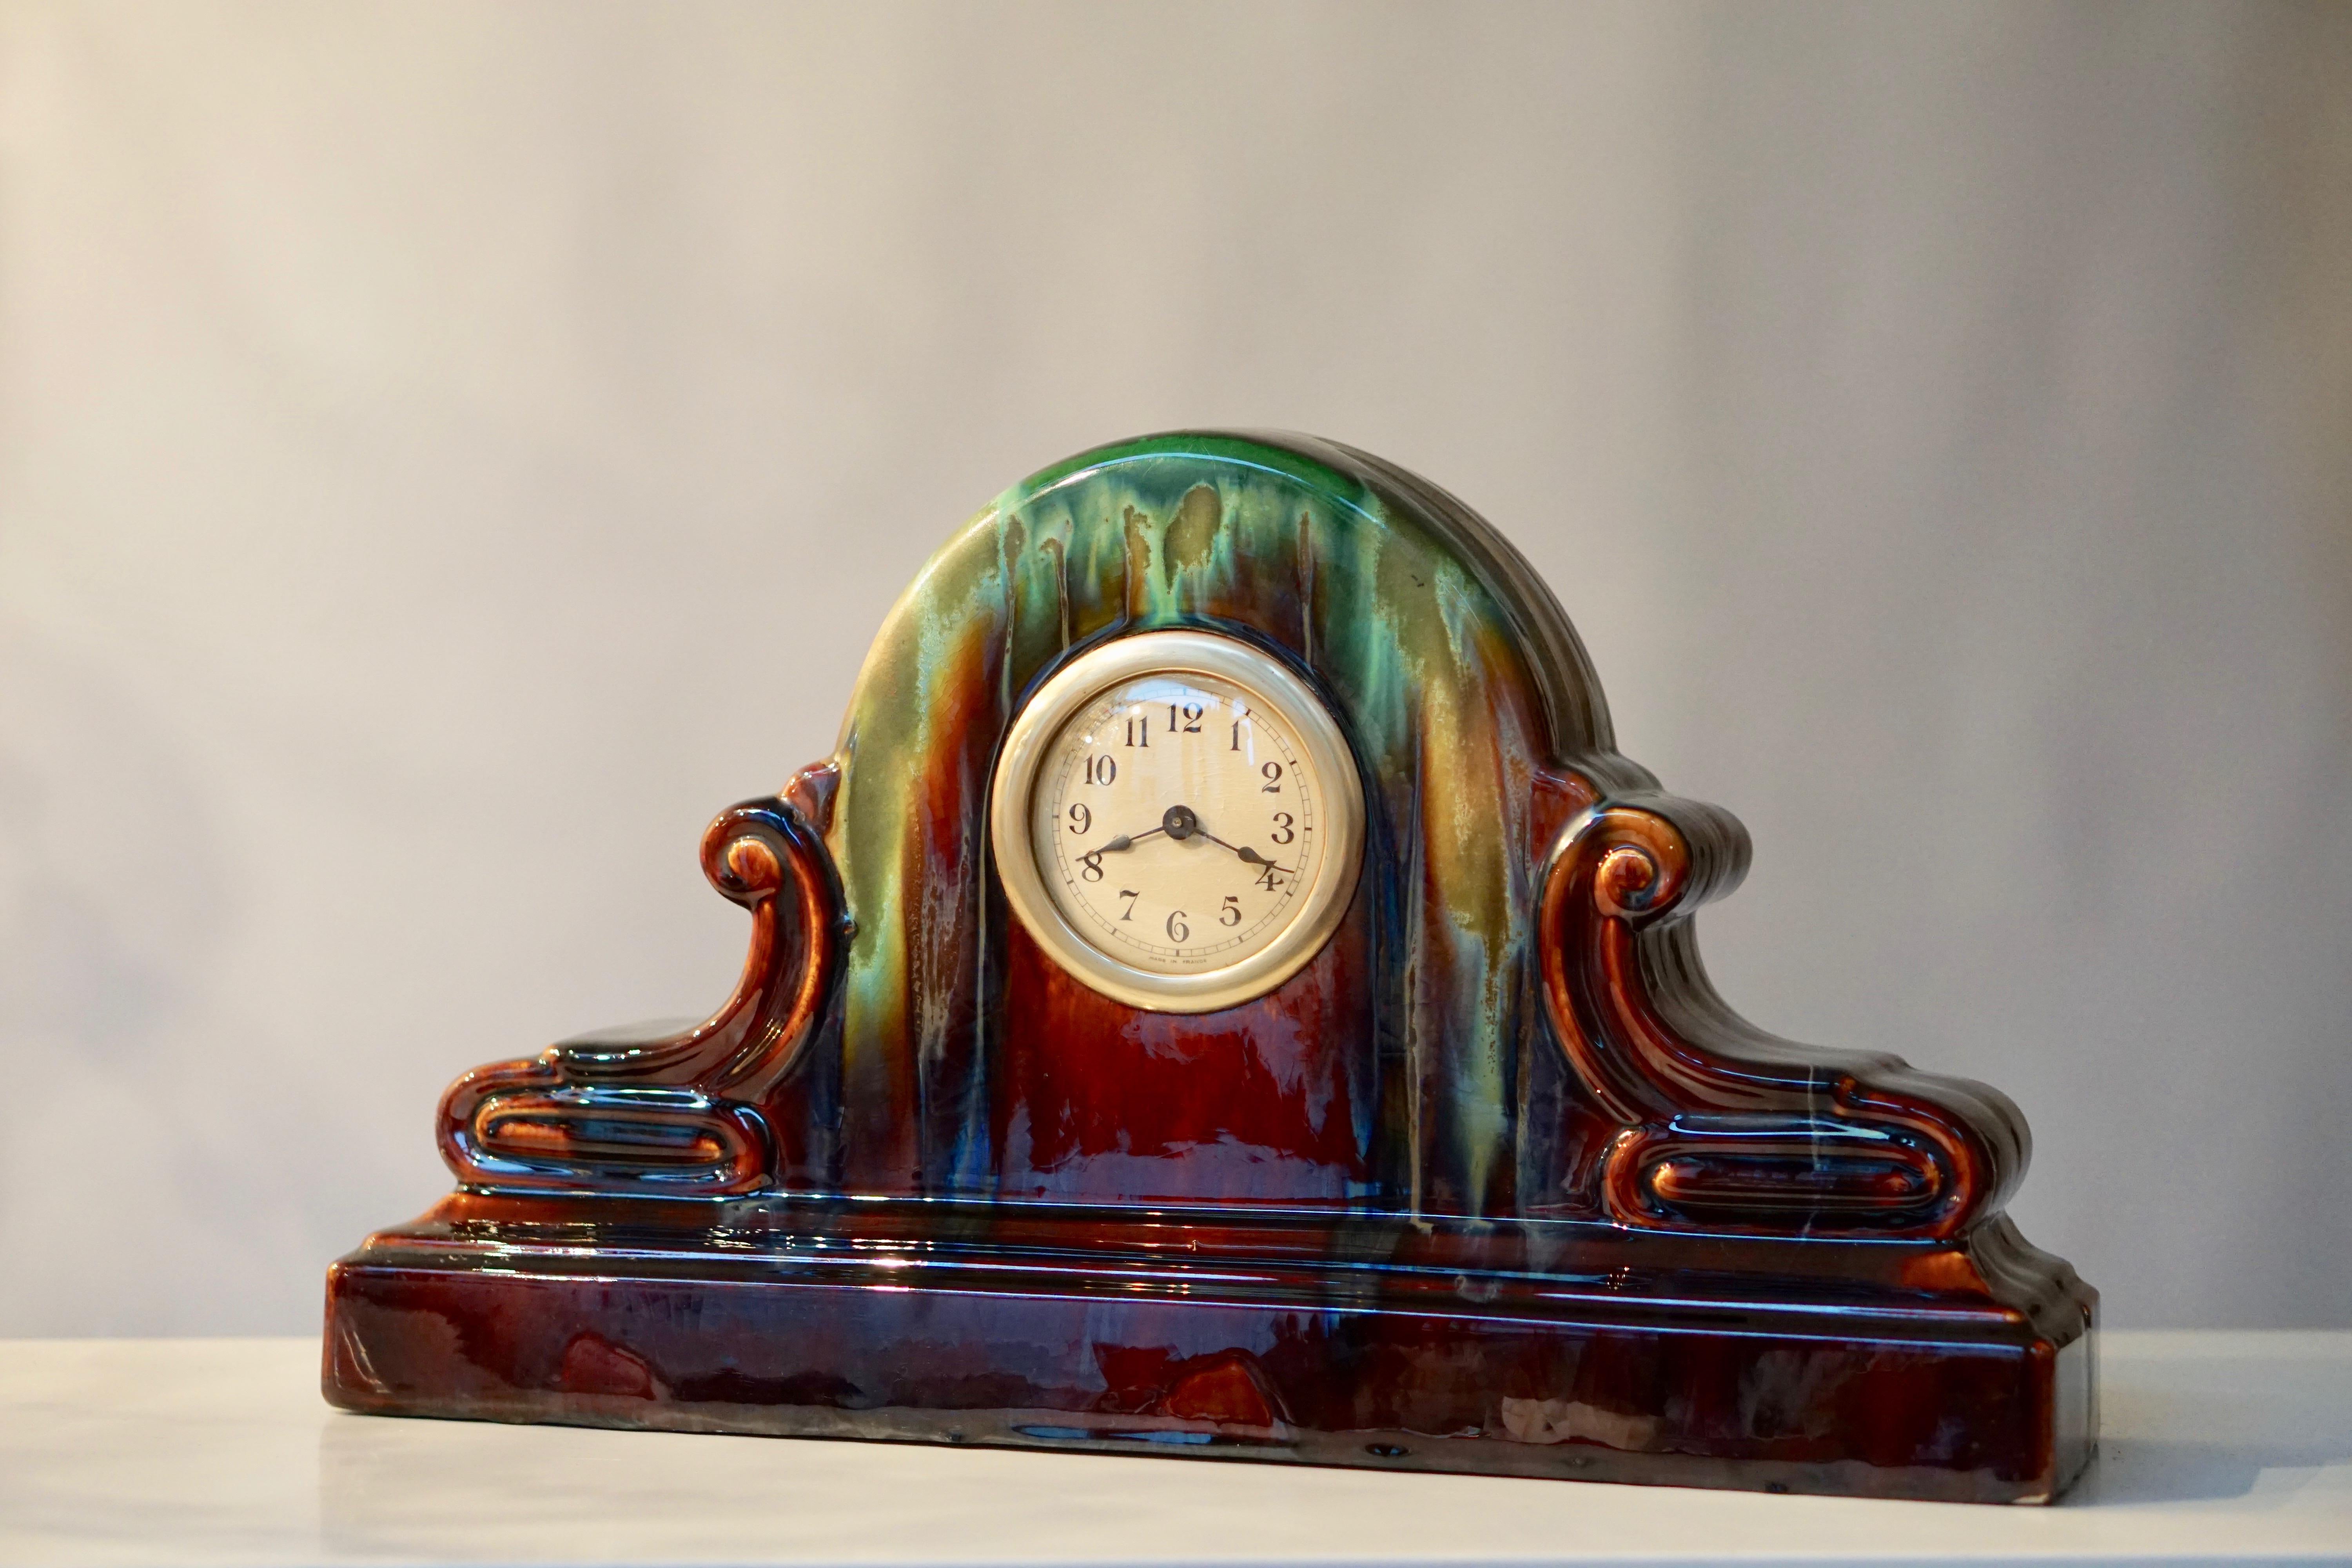 French ceramic Art Deco mantel orb table clock.
Width 45 cm.
Height 27 cm.
Depth 12 cm.